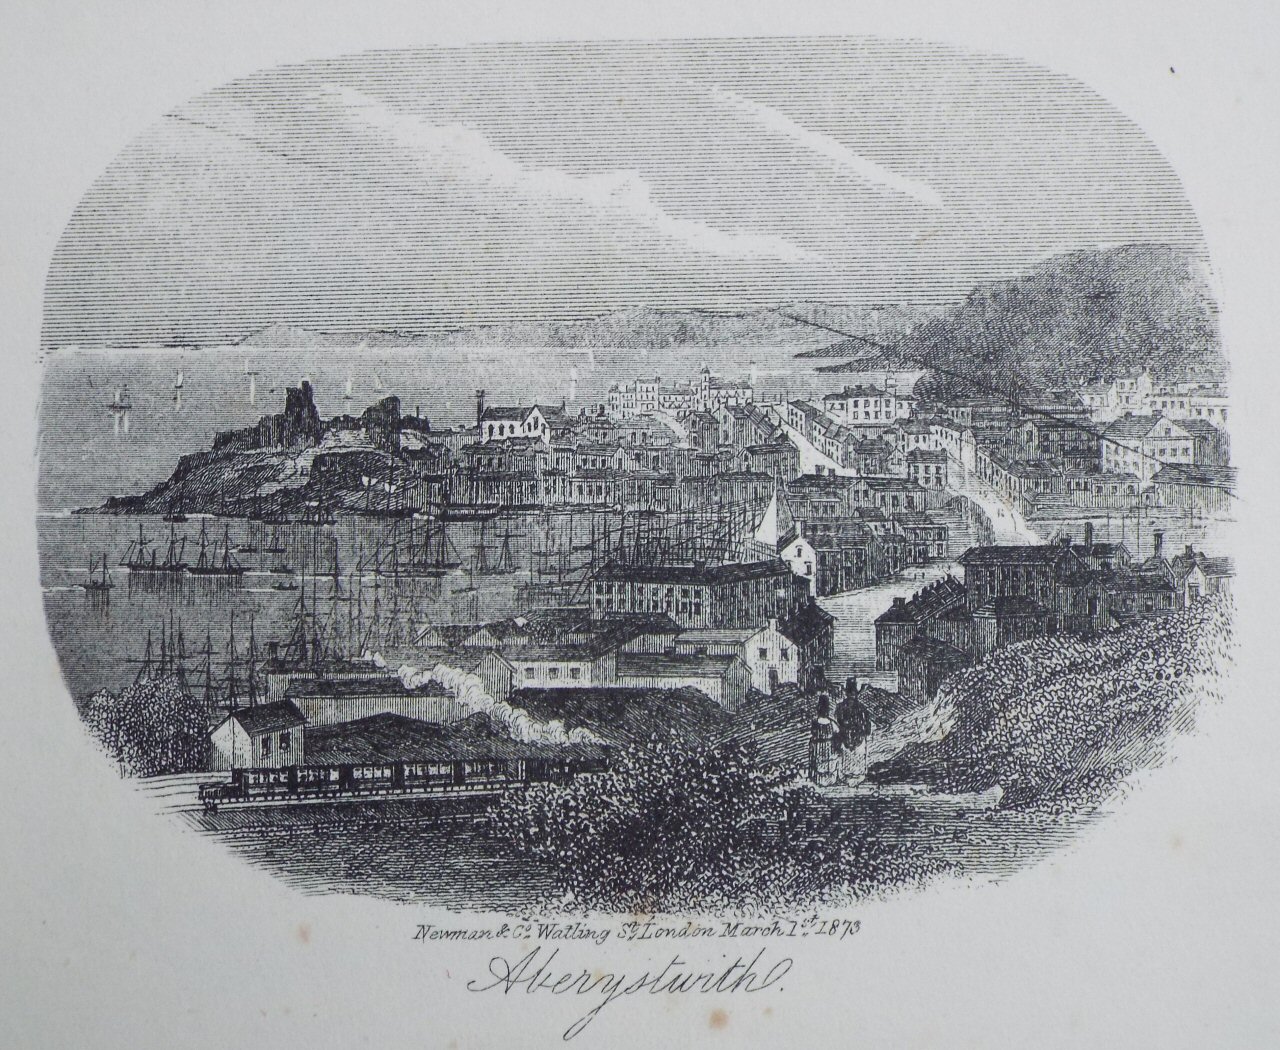 Steel Vignette - Aberystwyth. - Newman